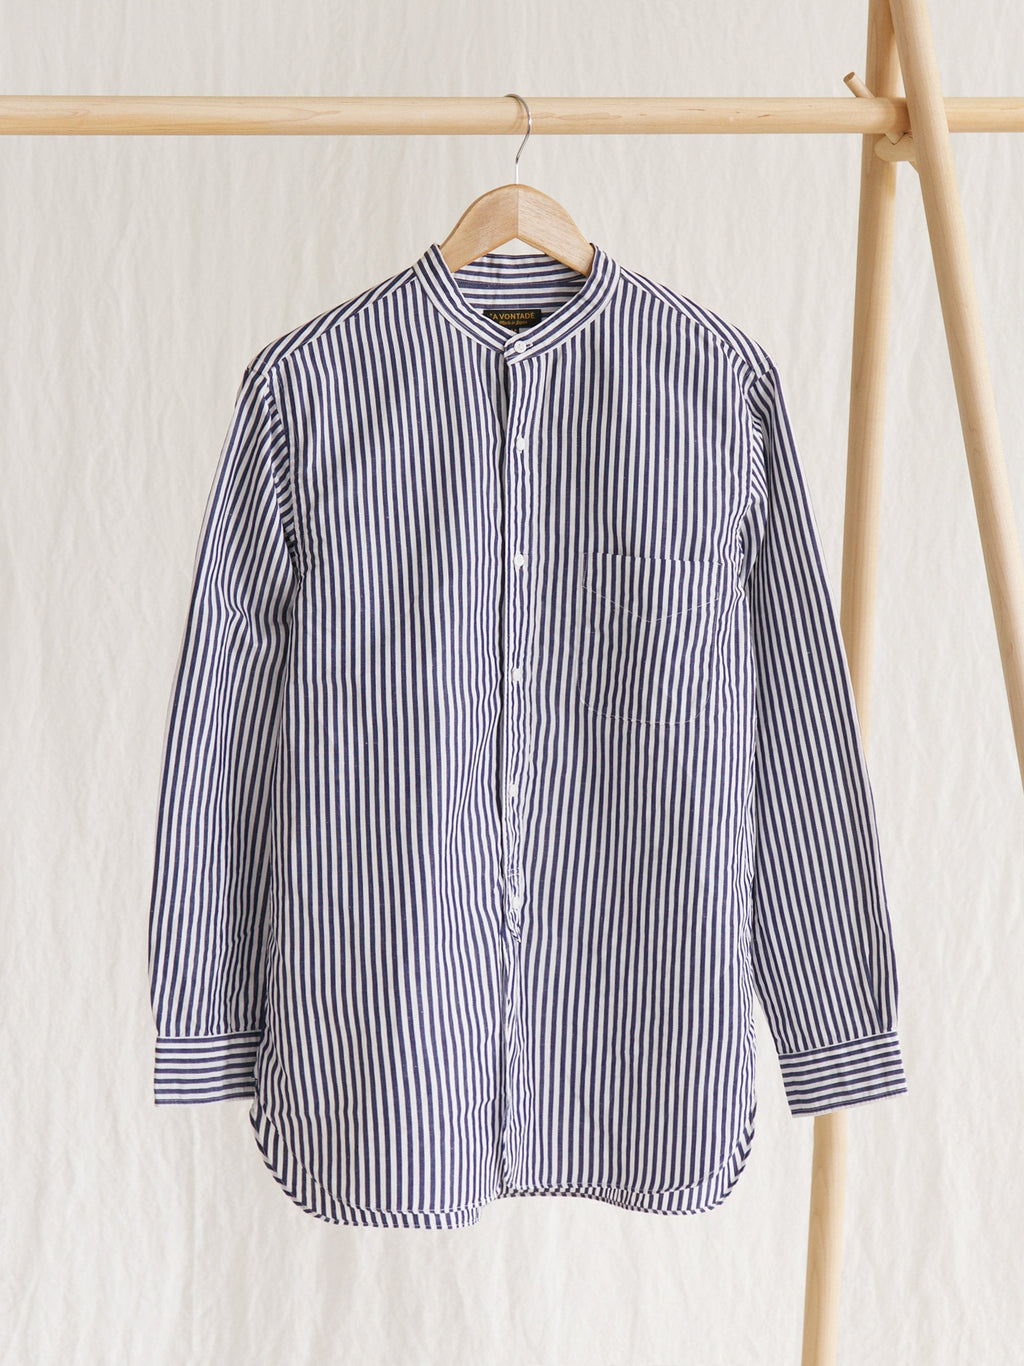 Namu Shop - A Vontade Banded Collar Shirt - Navy Stripe